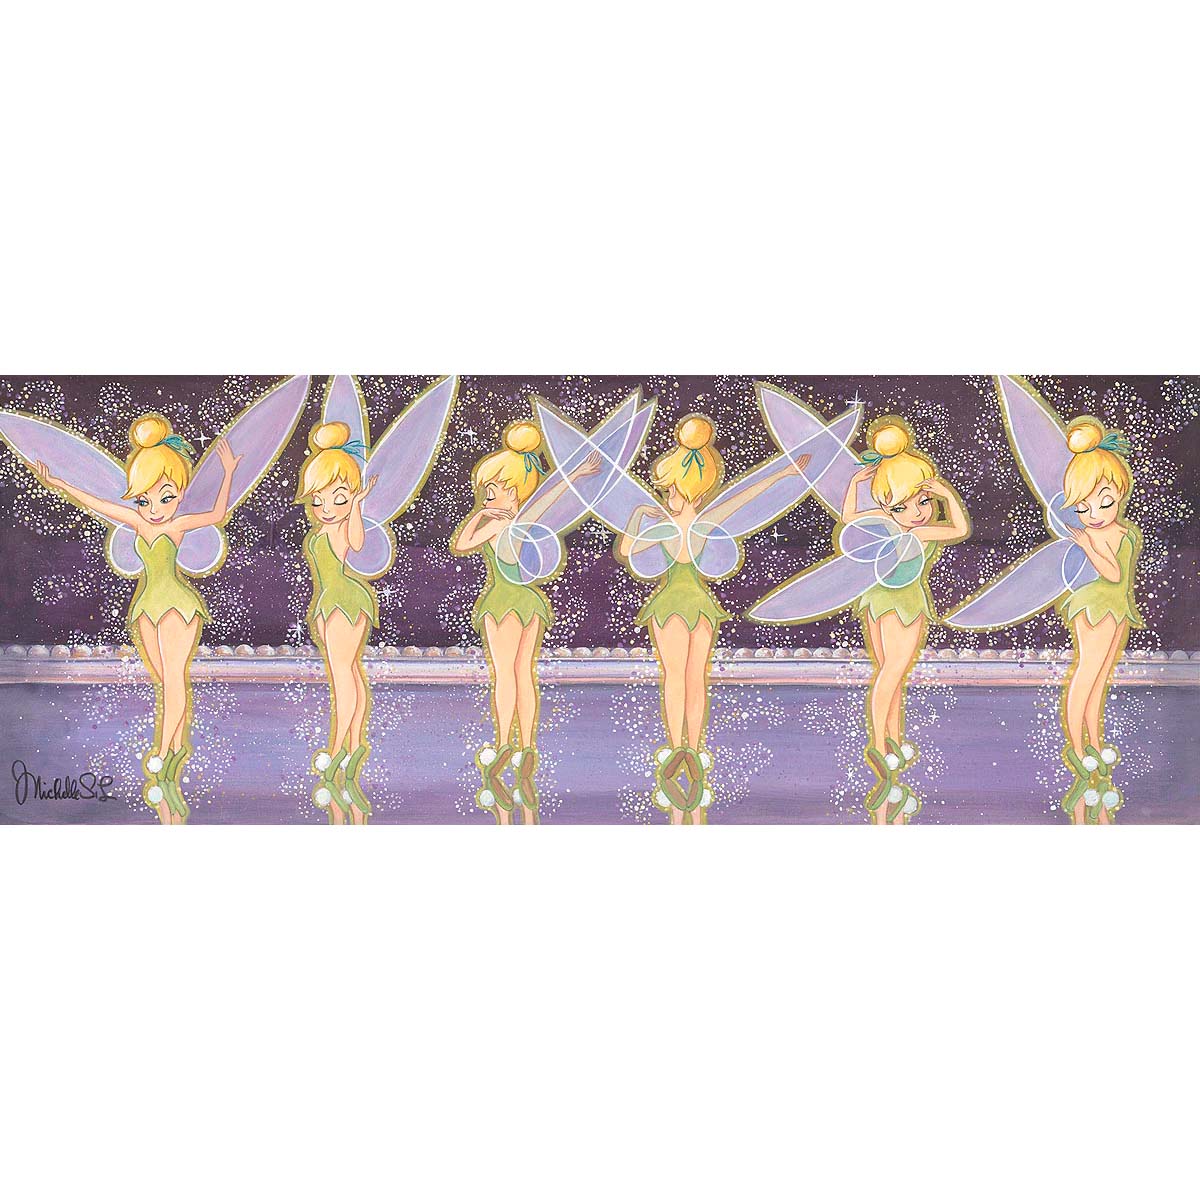 Michelle St. Laurent Disney "Tink Twist" Limited Edition Canvas Giclee